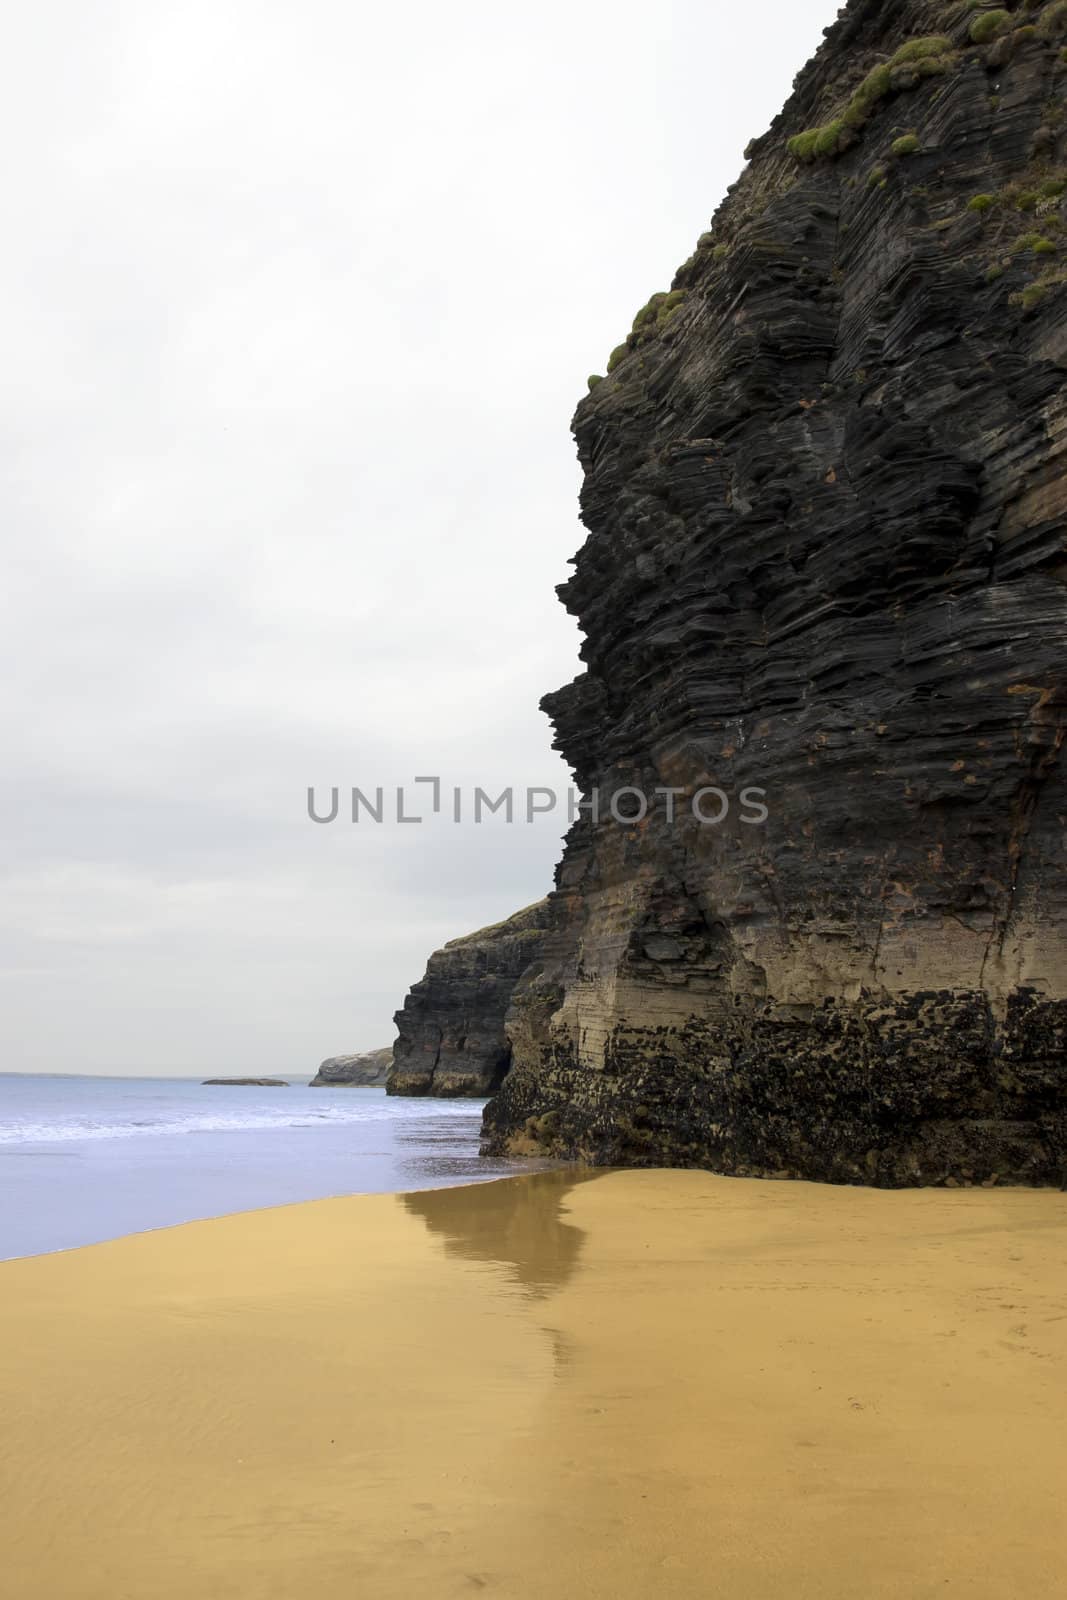 ancient cliffs on the coastal beach in ballybunion county kerry ireland